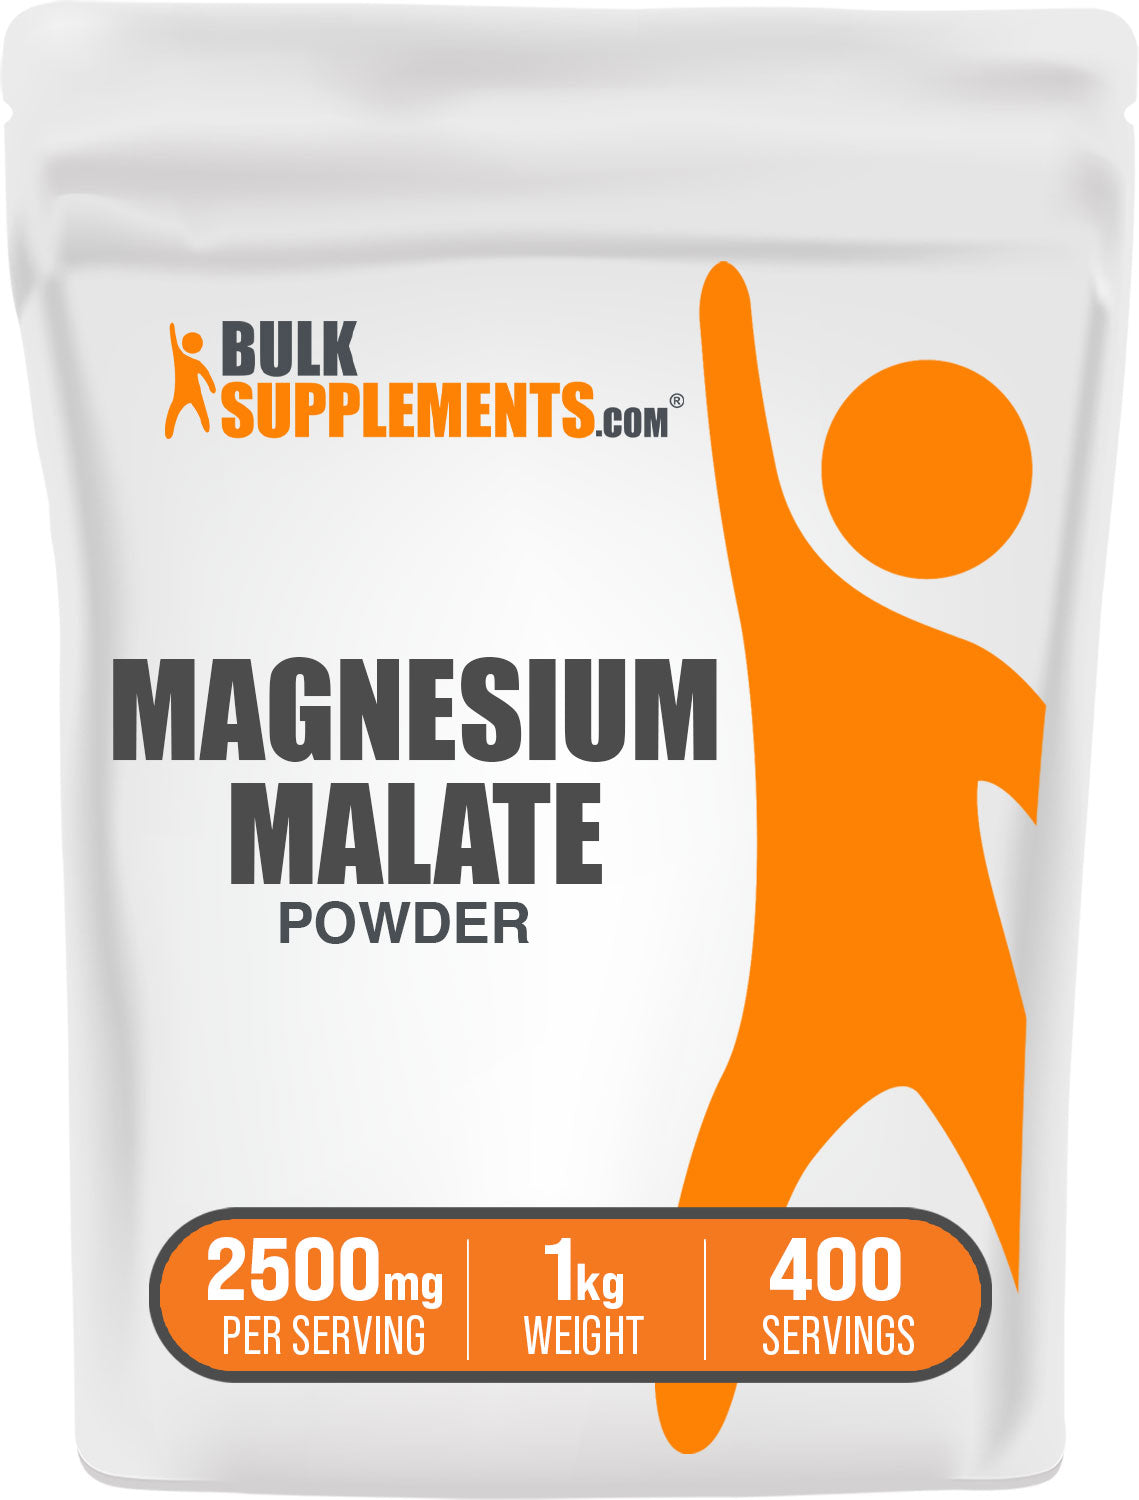 Magnesium Malate Powder, 1kg Bag, 2500mg per serving and 400 servings